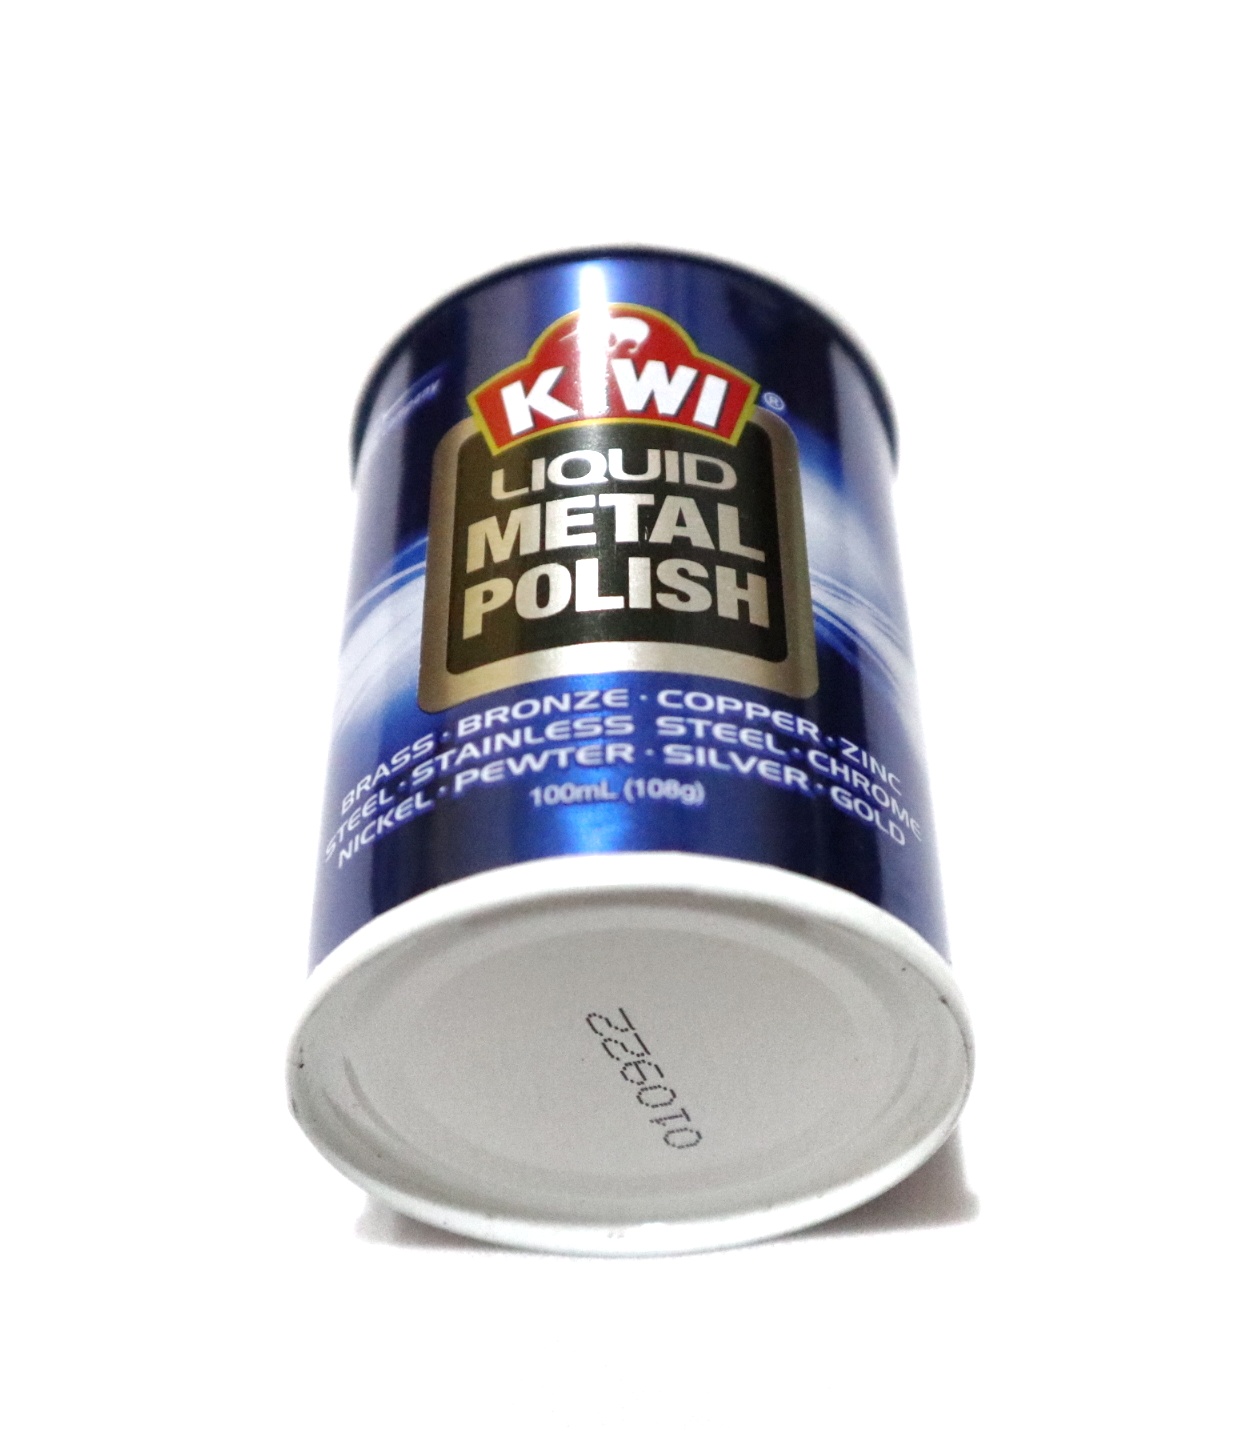 KIWI Liquid Metal Polish 100ml: Buy 